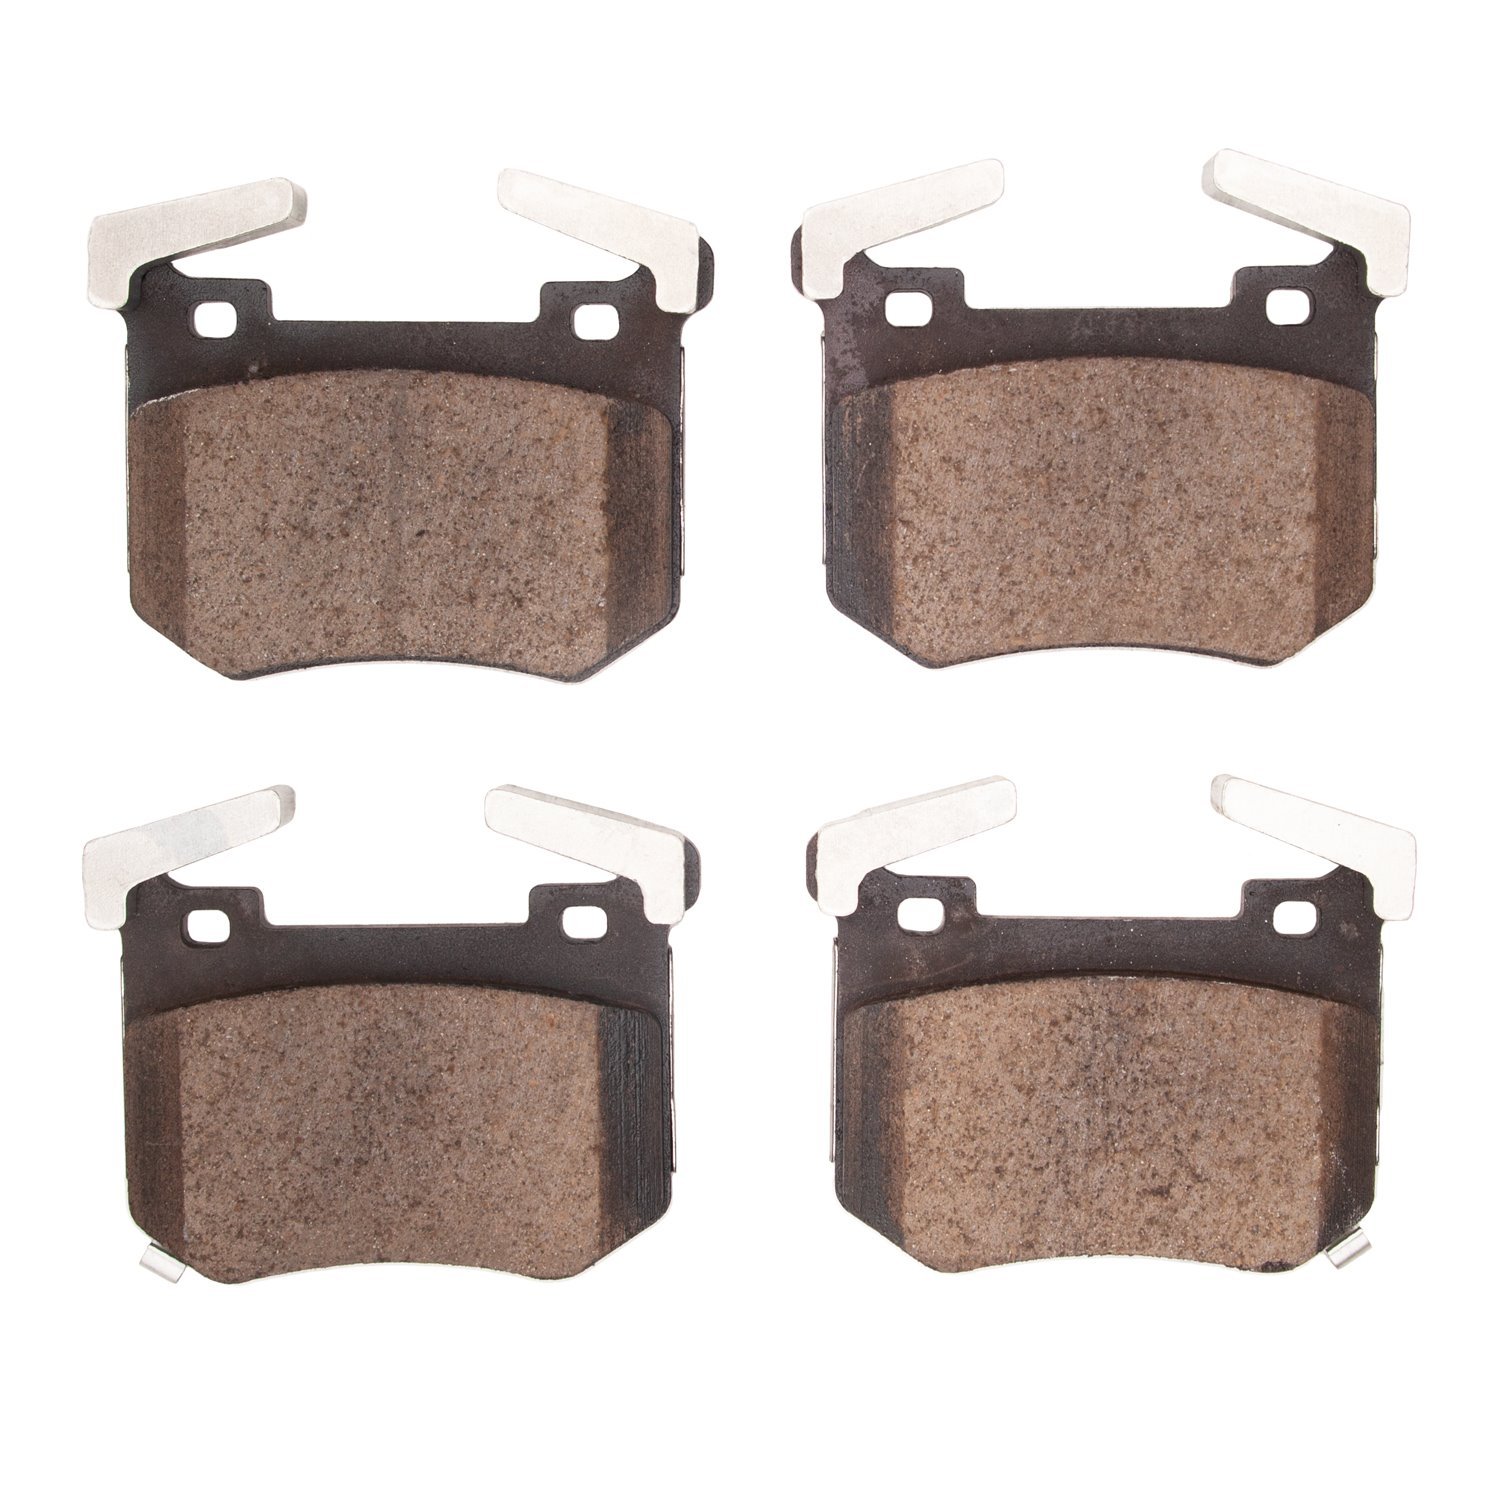 1551-2144-00 5000 Advanced Ceramic Brake Pads, Fits Select Kia/Hyundai/Genesis, Position: Rear